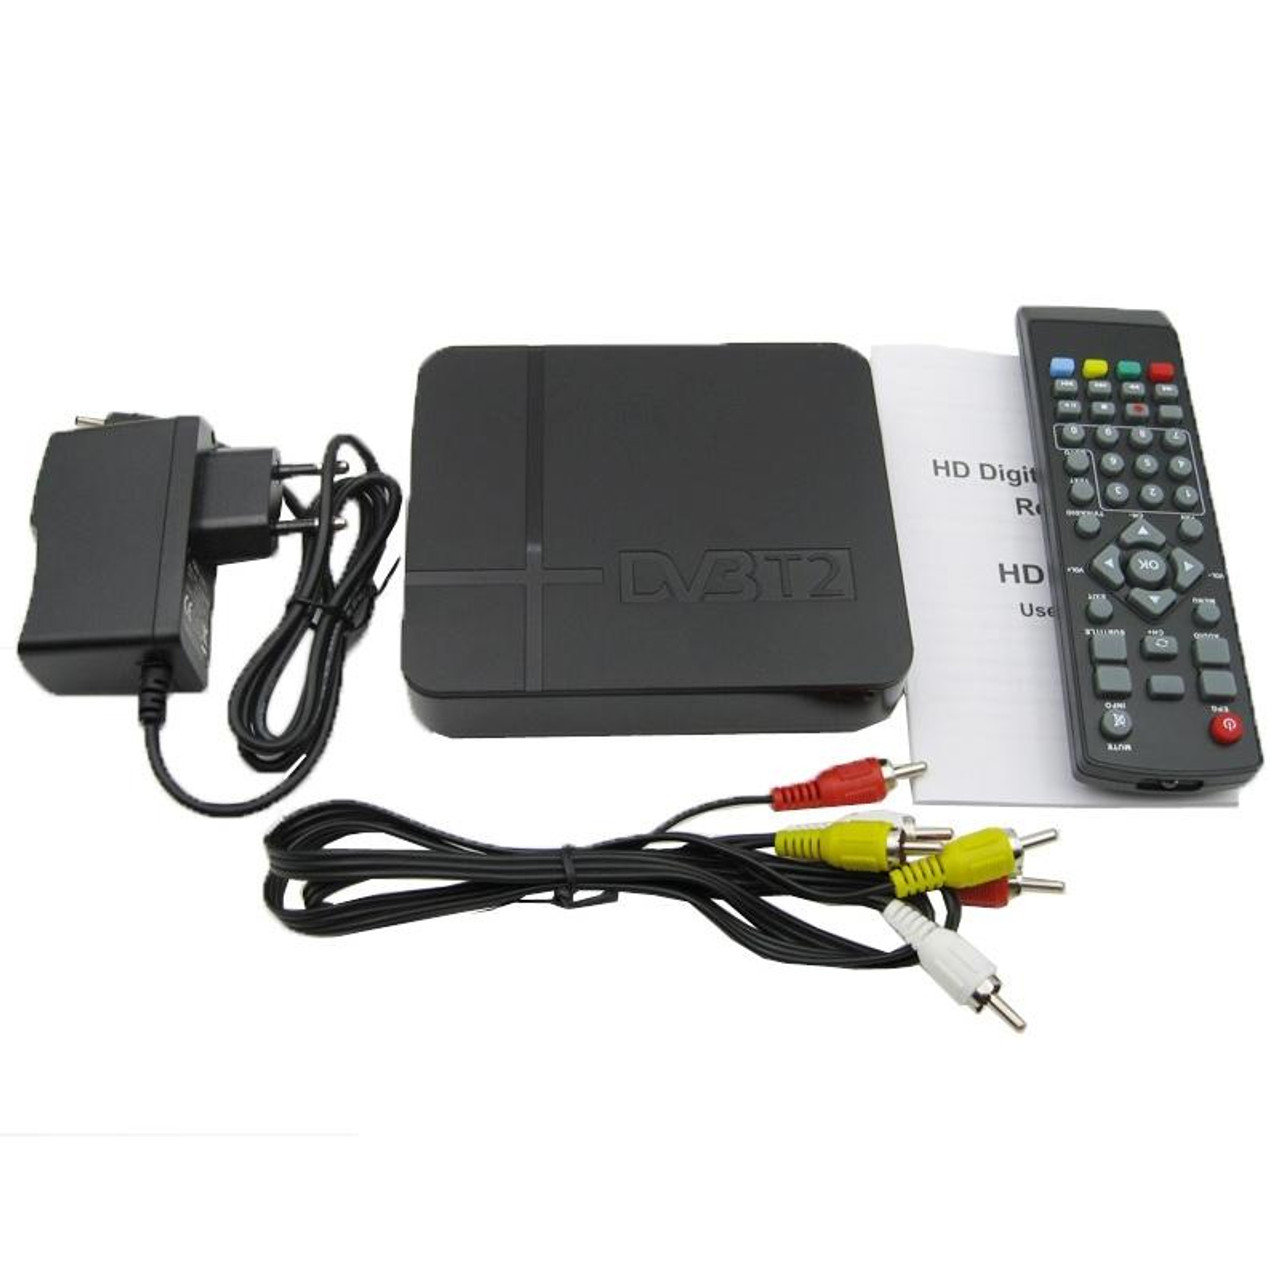 HD 1080P PVR K2 DVB-T2 Digital Terrestrial Receiver Broadcasting TV Box  with Remote Control(Black)